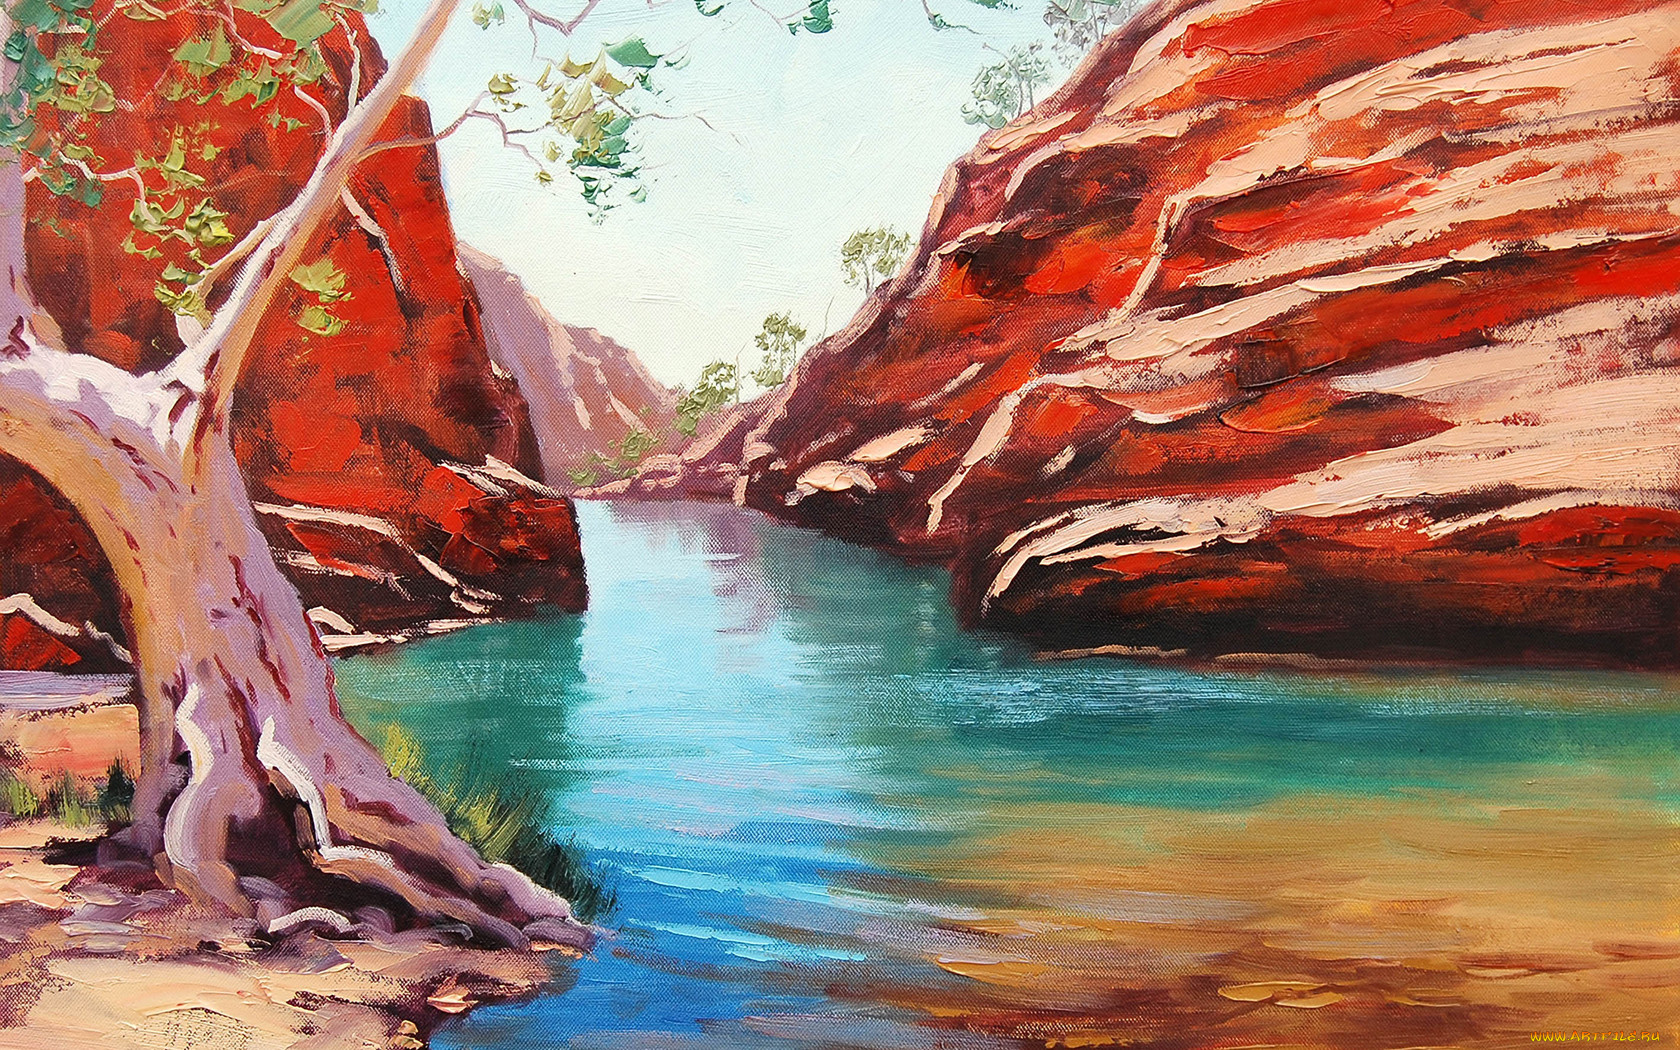 рисованные, живопись, река, дерево, канйон